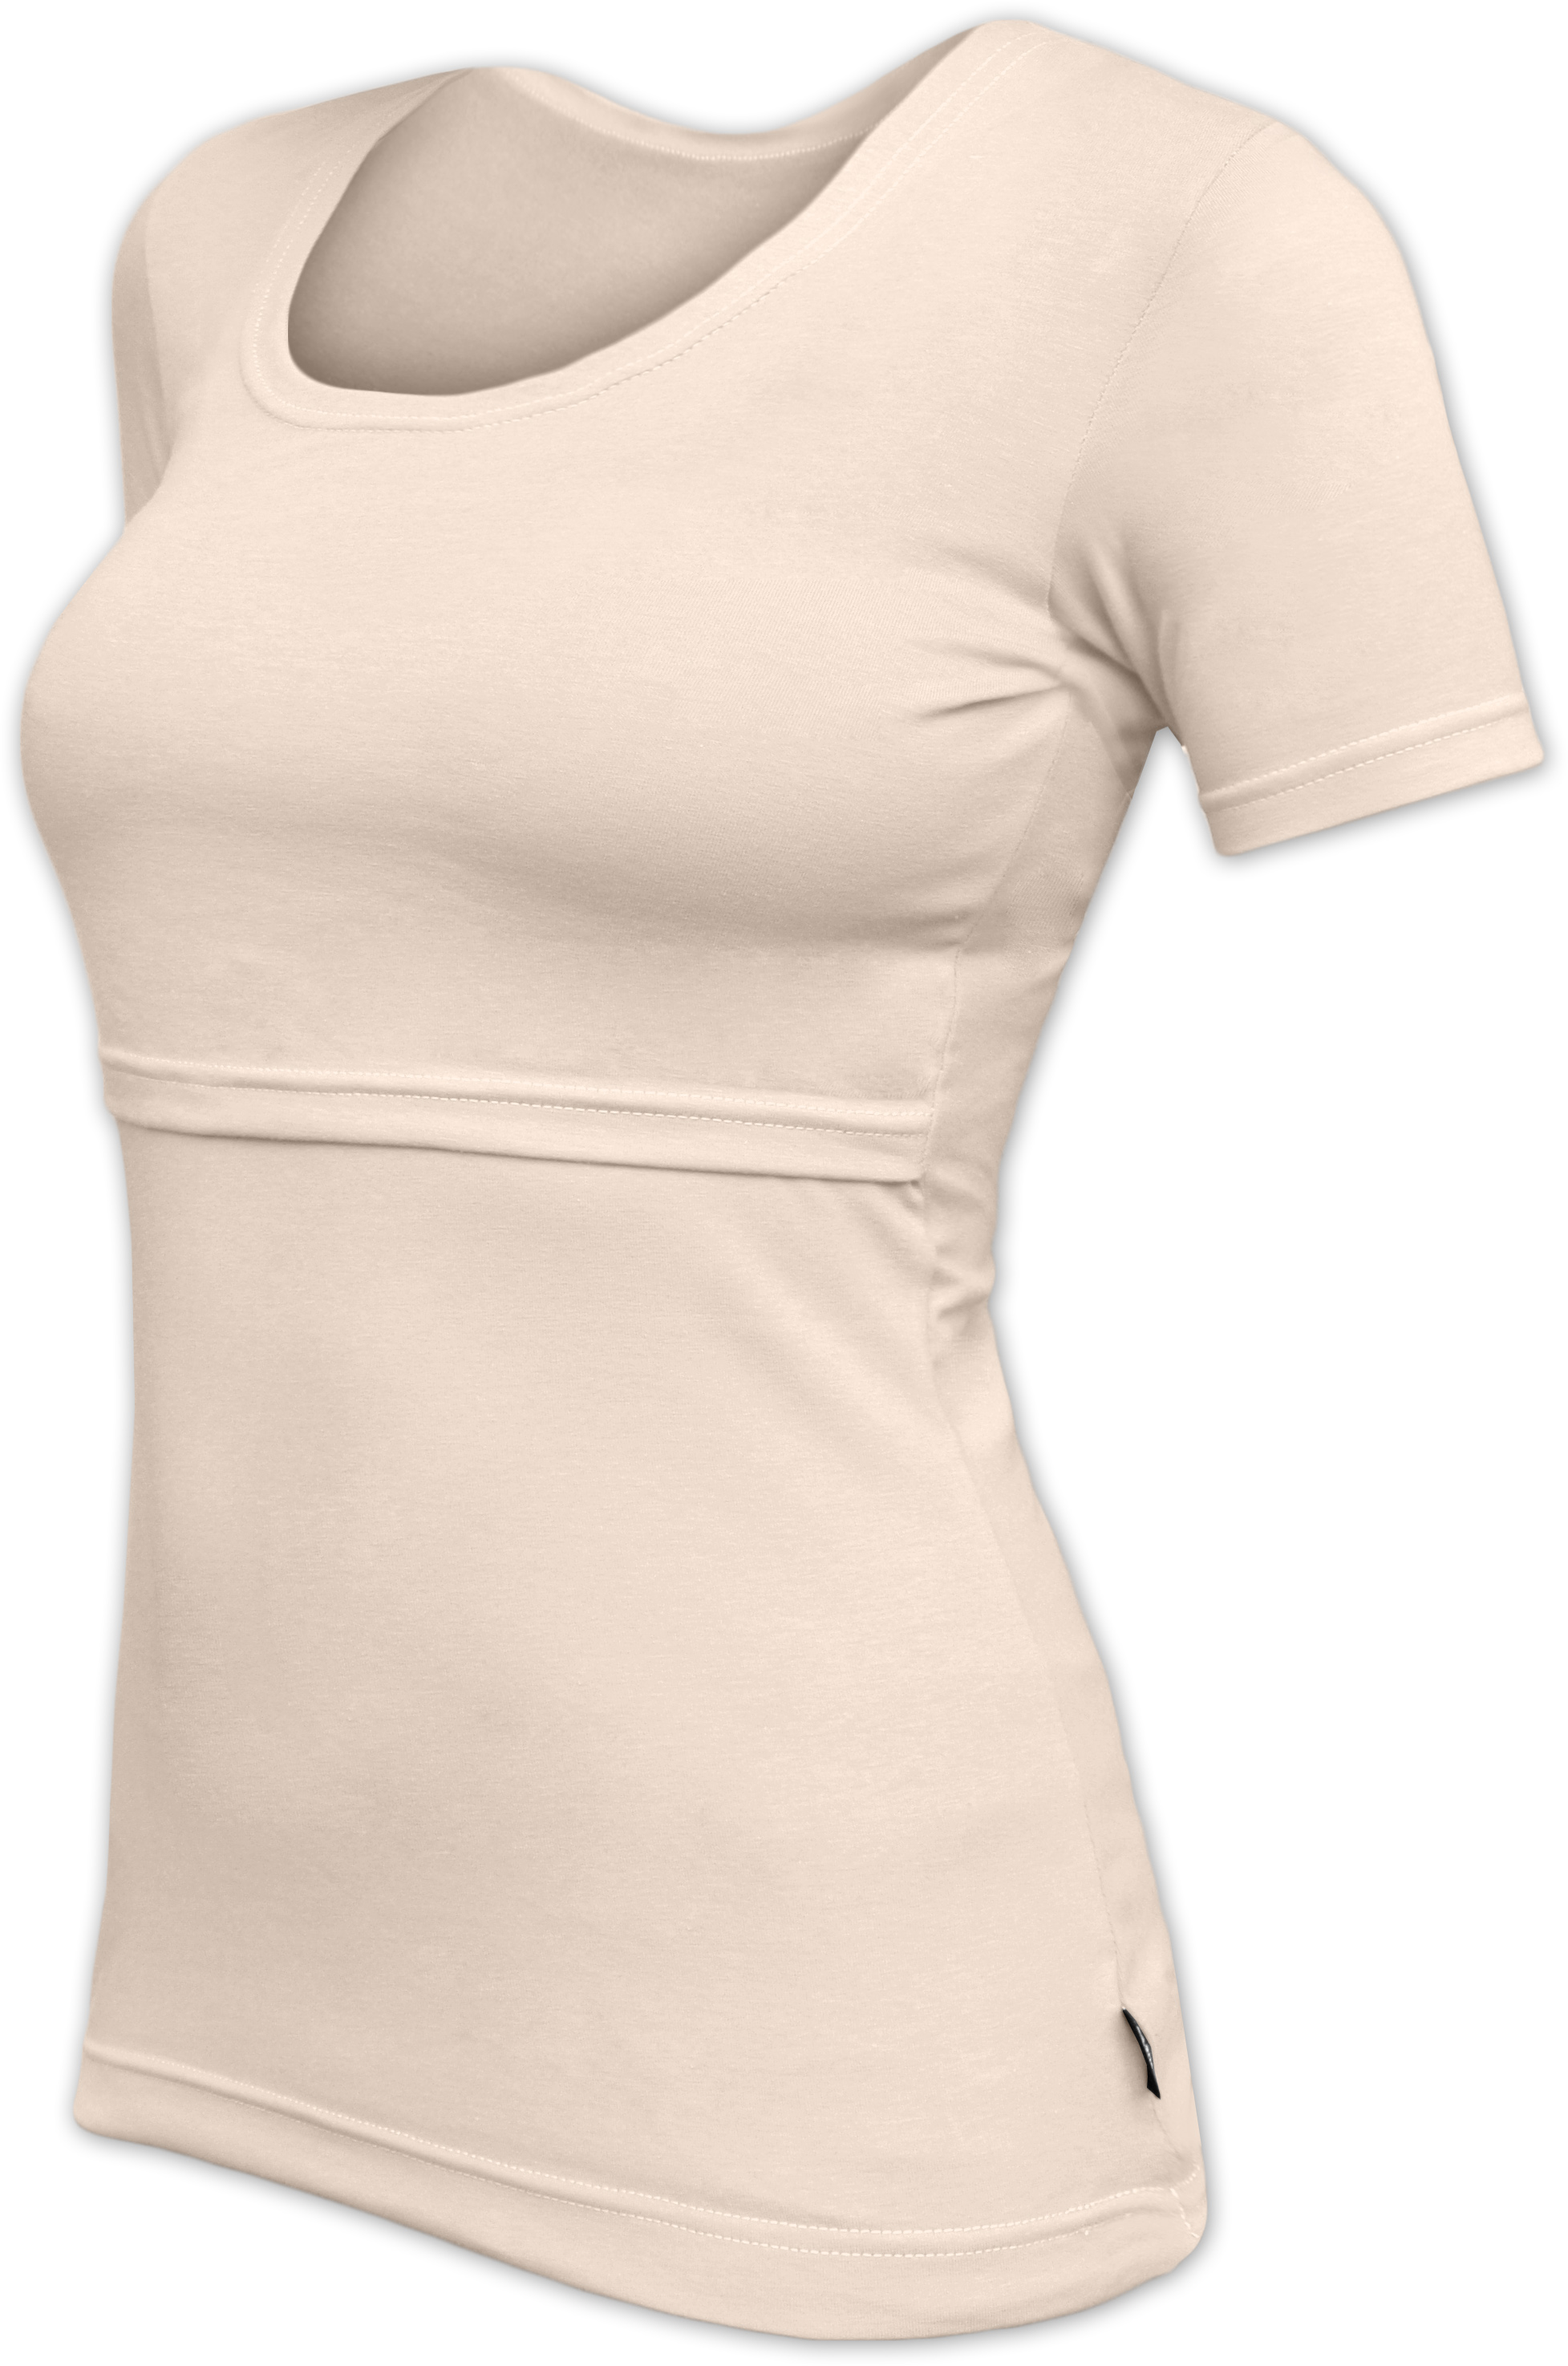 Breast-feeding T-shirt Katerina, short sleeves, CAFFE LATTE